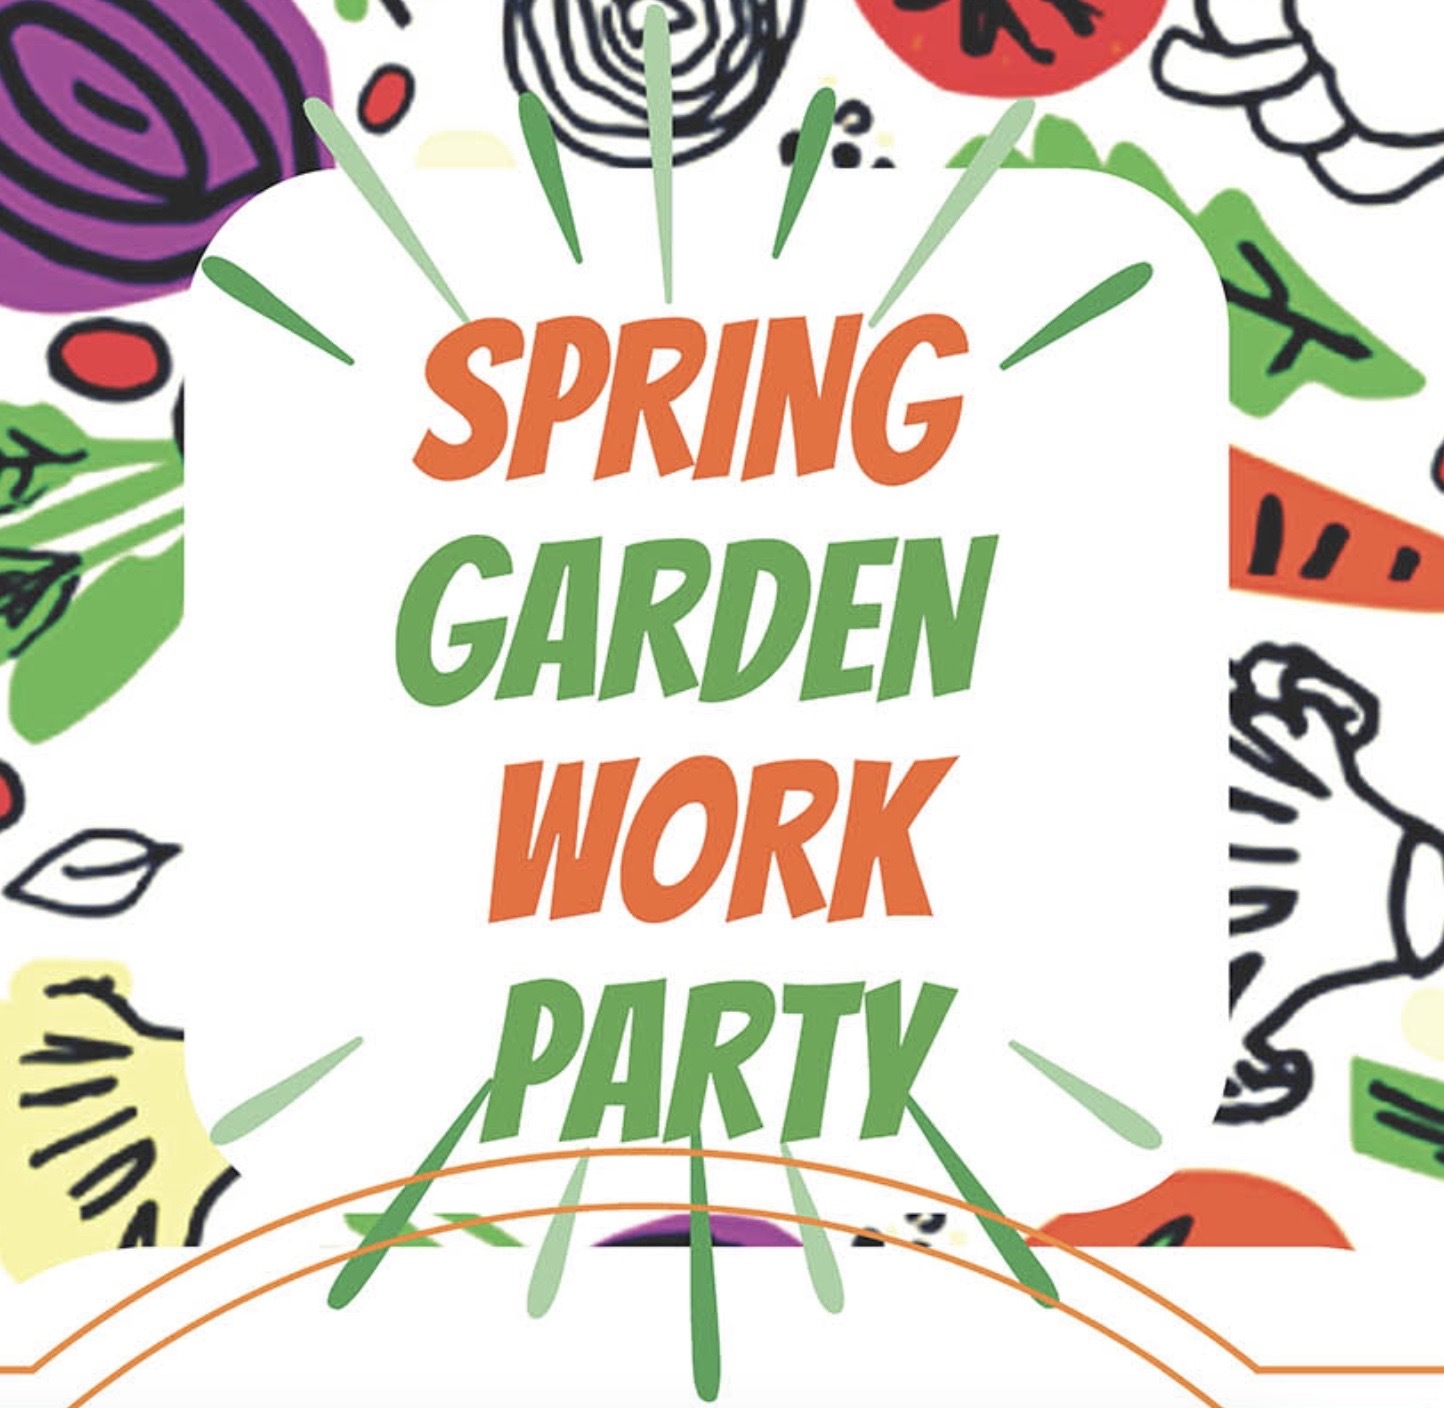 Hudson Valley Seed Spring Garden Work Party